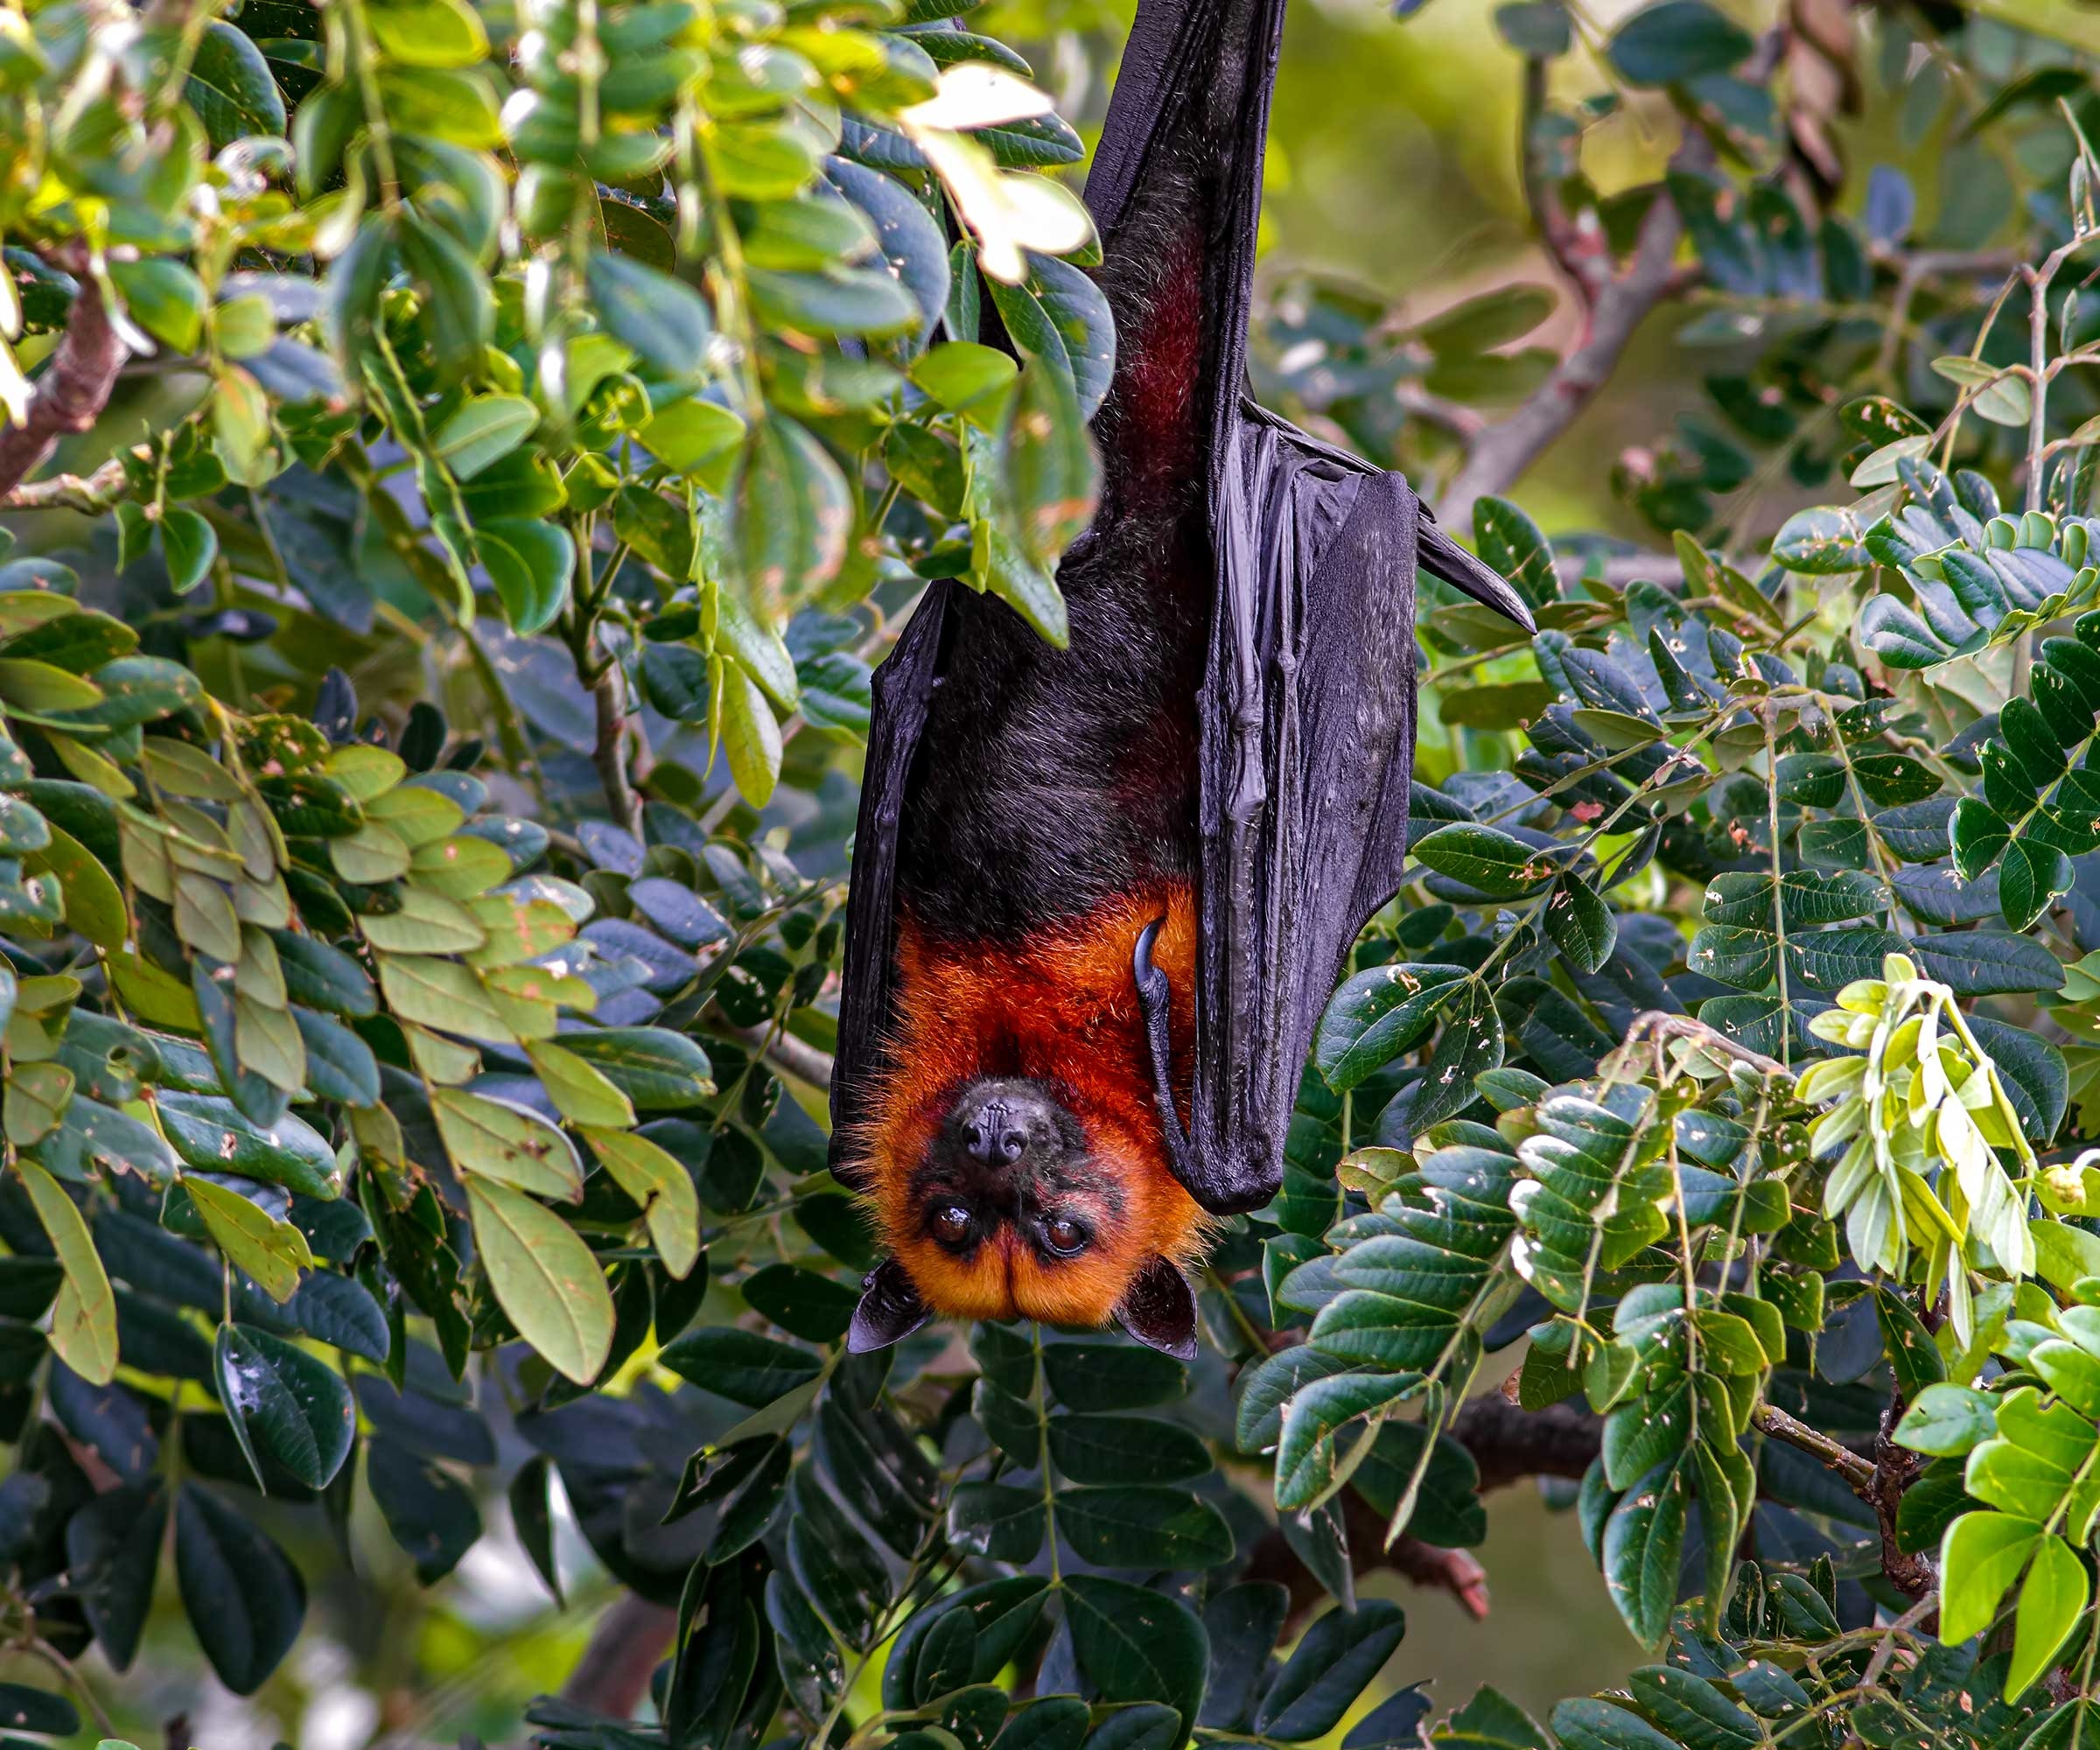 A Lyle’s flying fox bat in Thailand. © Rapeepong Puttakumwong